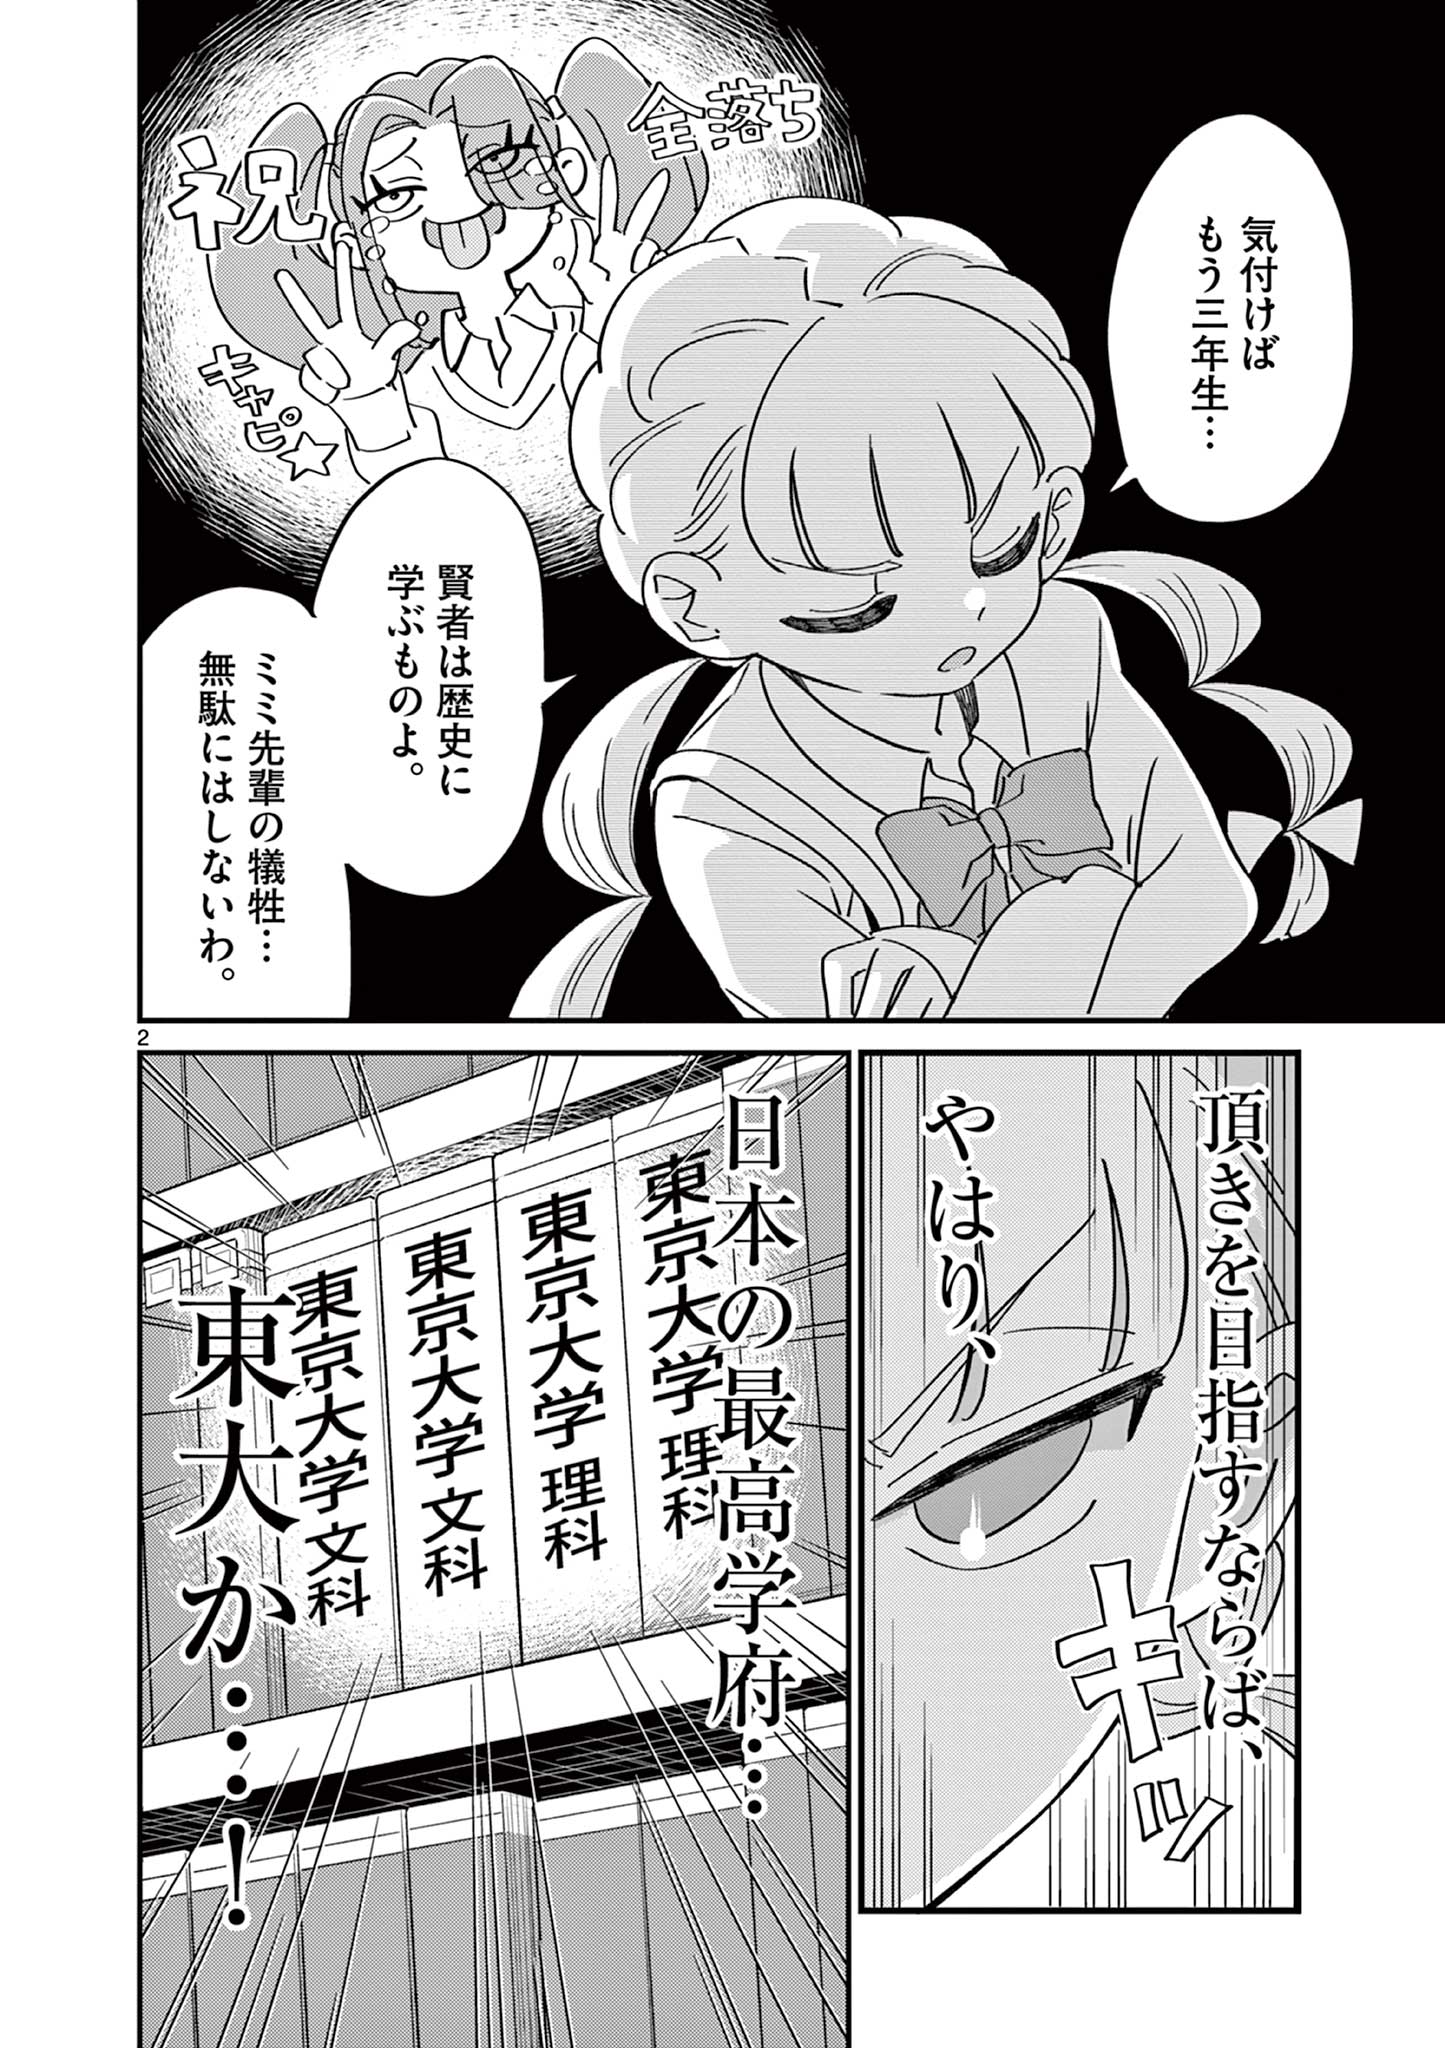 Ranka-chan wa Bitch ni Naritai - Chapter 23 - Page 2